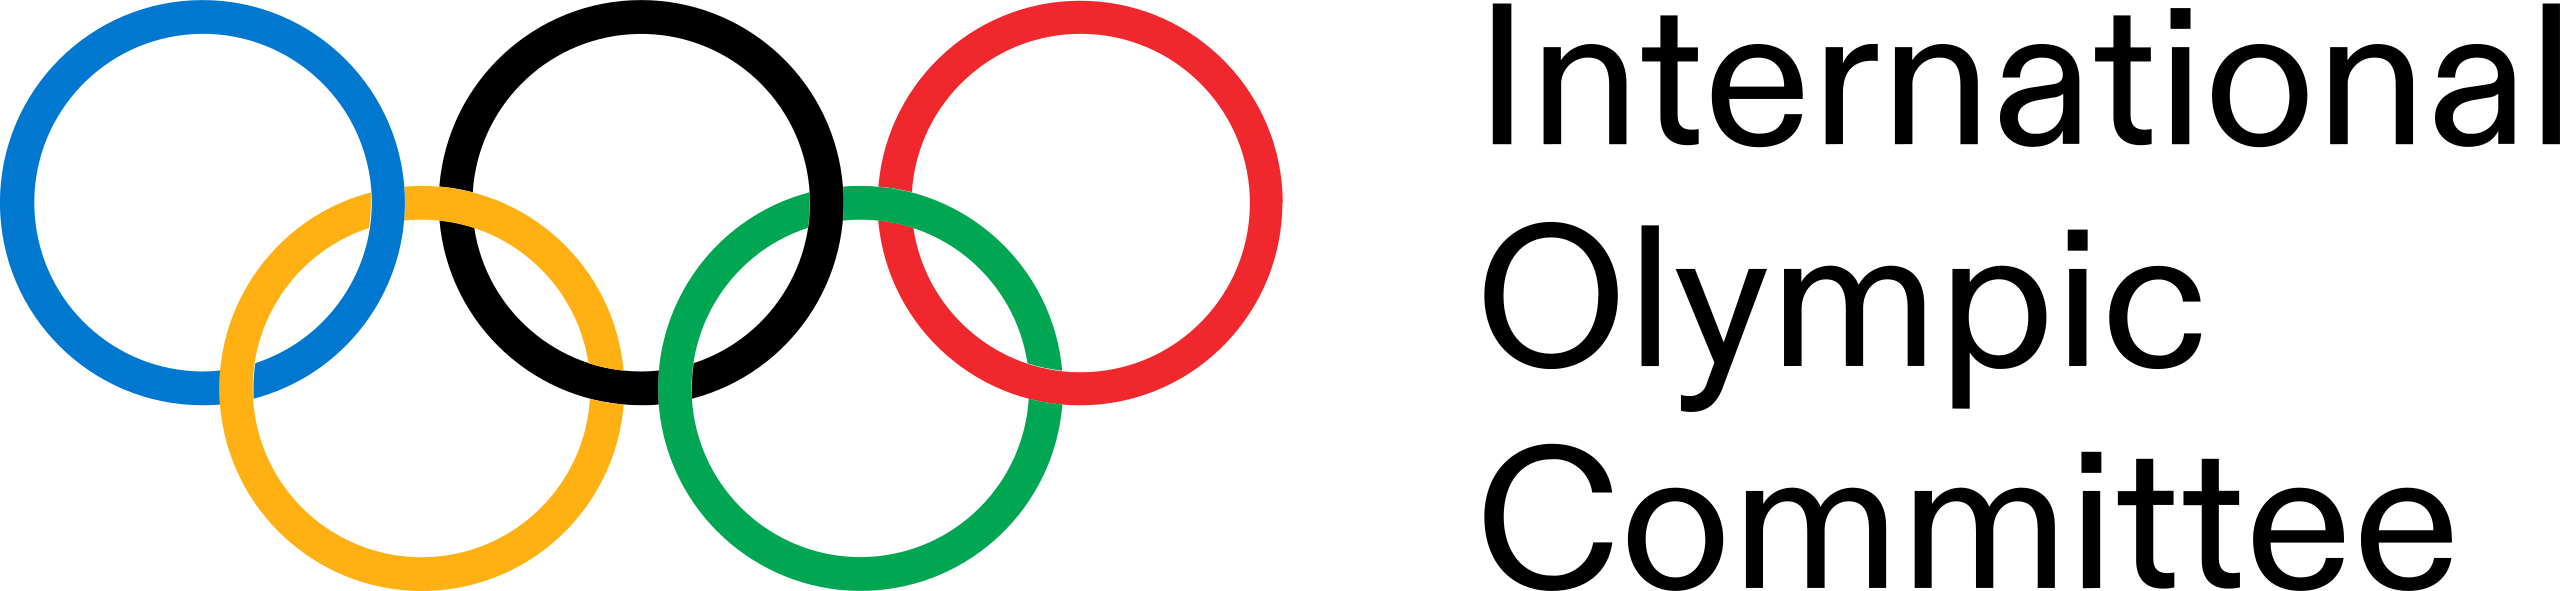 2016 Rio Olympics Logo - NBC Sports PressboxNBC Sports Pressbox